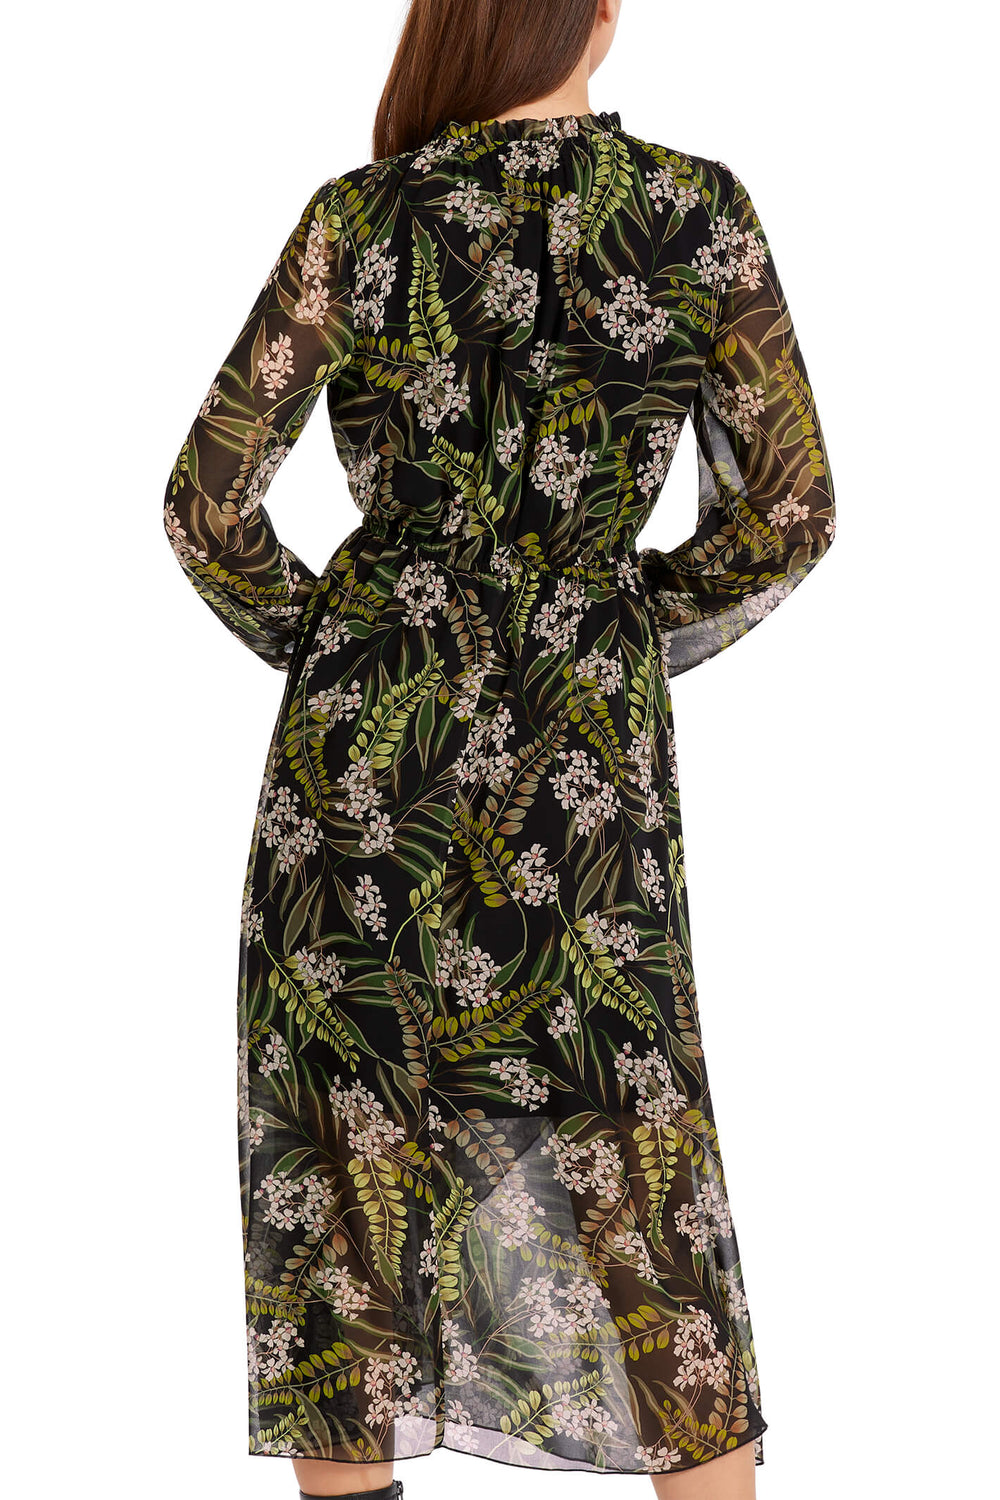 Marc Cain Collections VC 21.49 W87 900 Black Leaf Print Floaty Dress - Olivia Grace Fashion